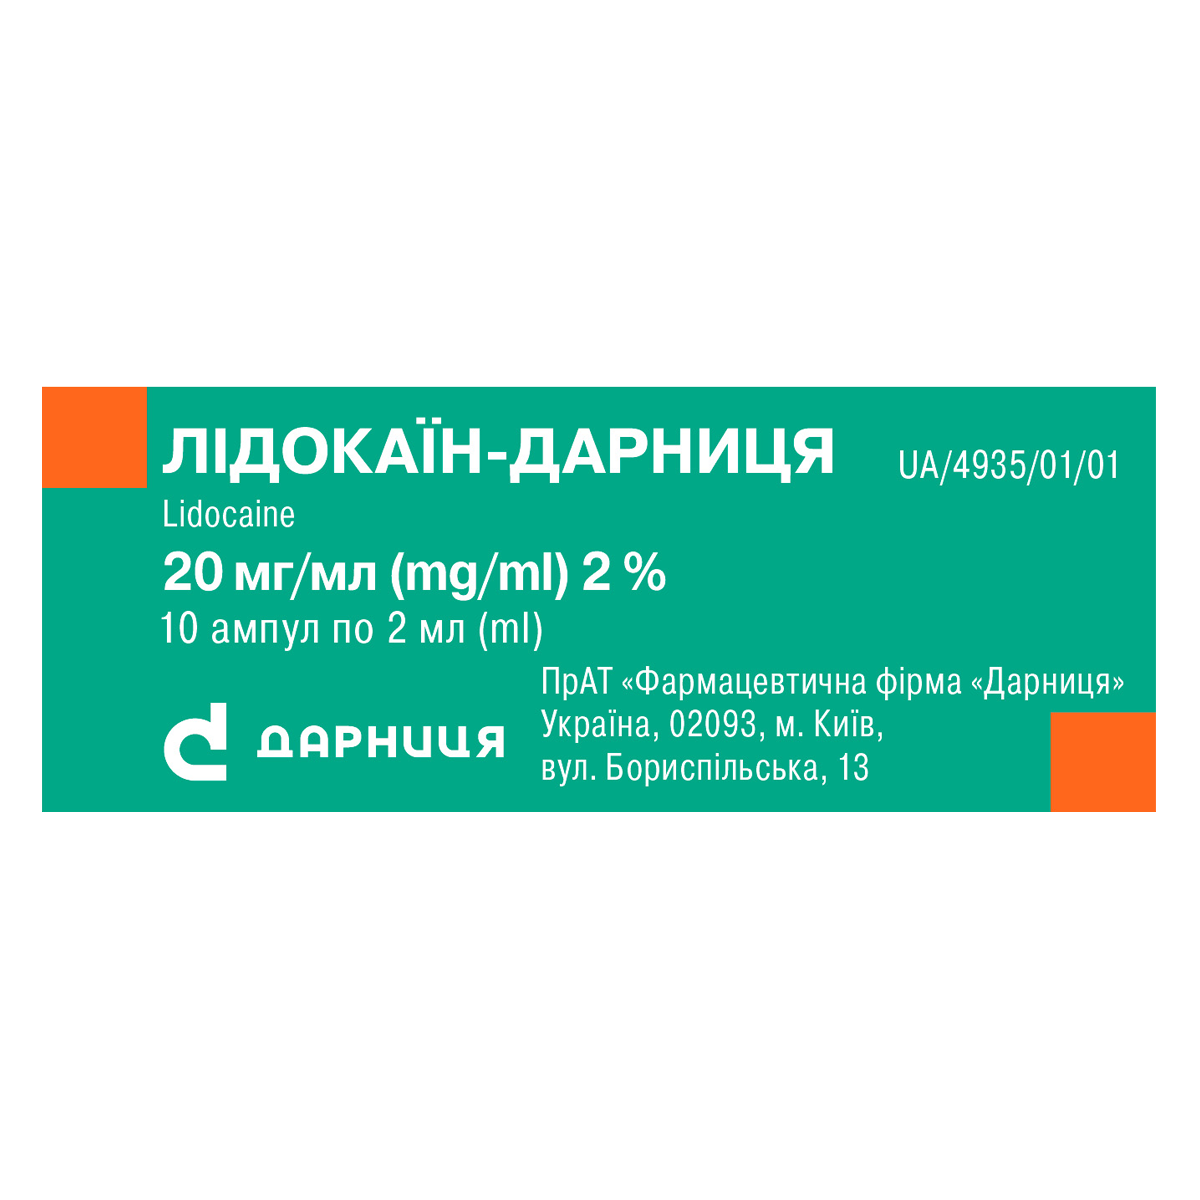 Лидокаин-Дарница фармацевтическая компания «Дарница»